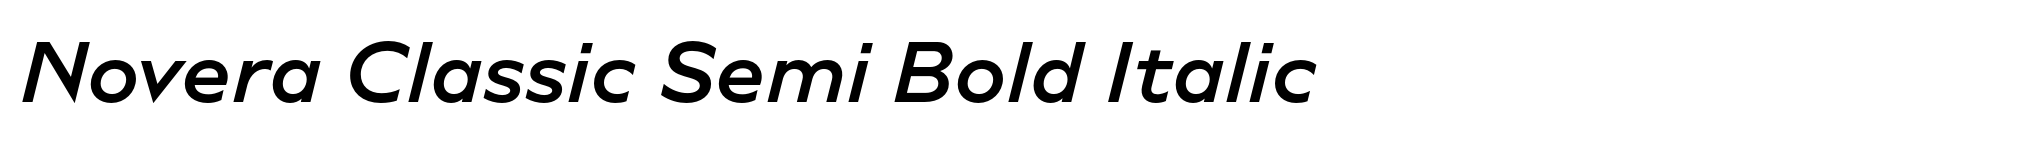 Novera Classic Semi Bold Italic image